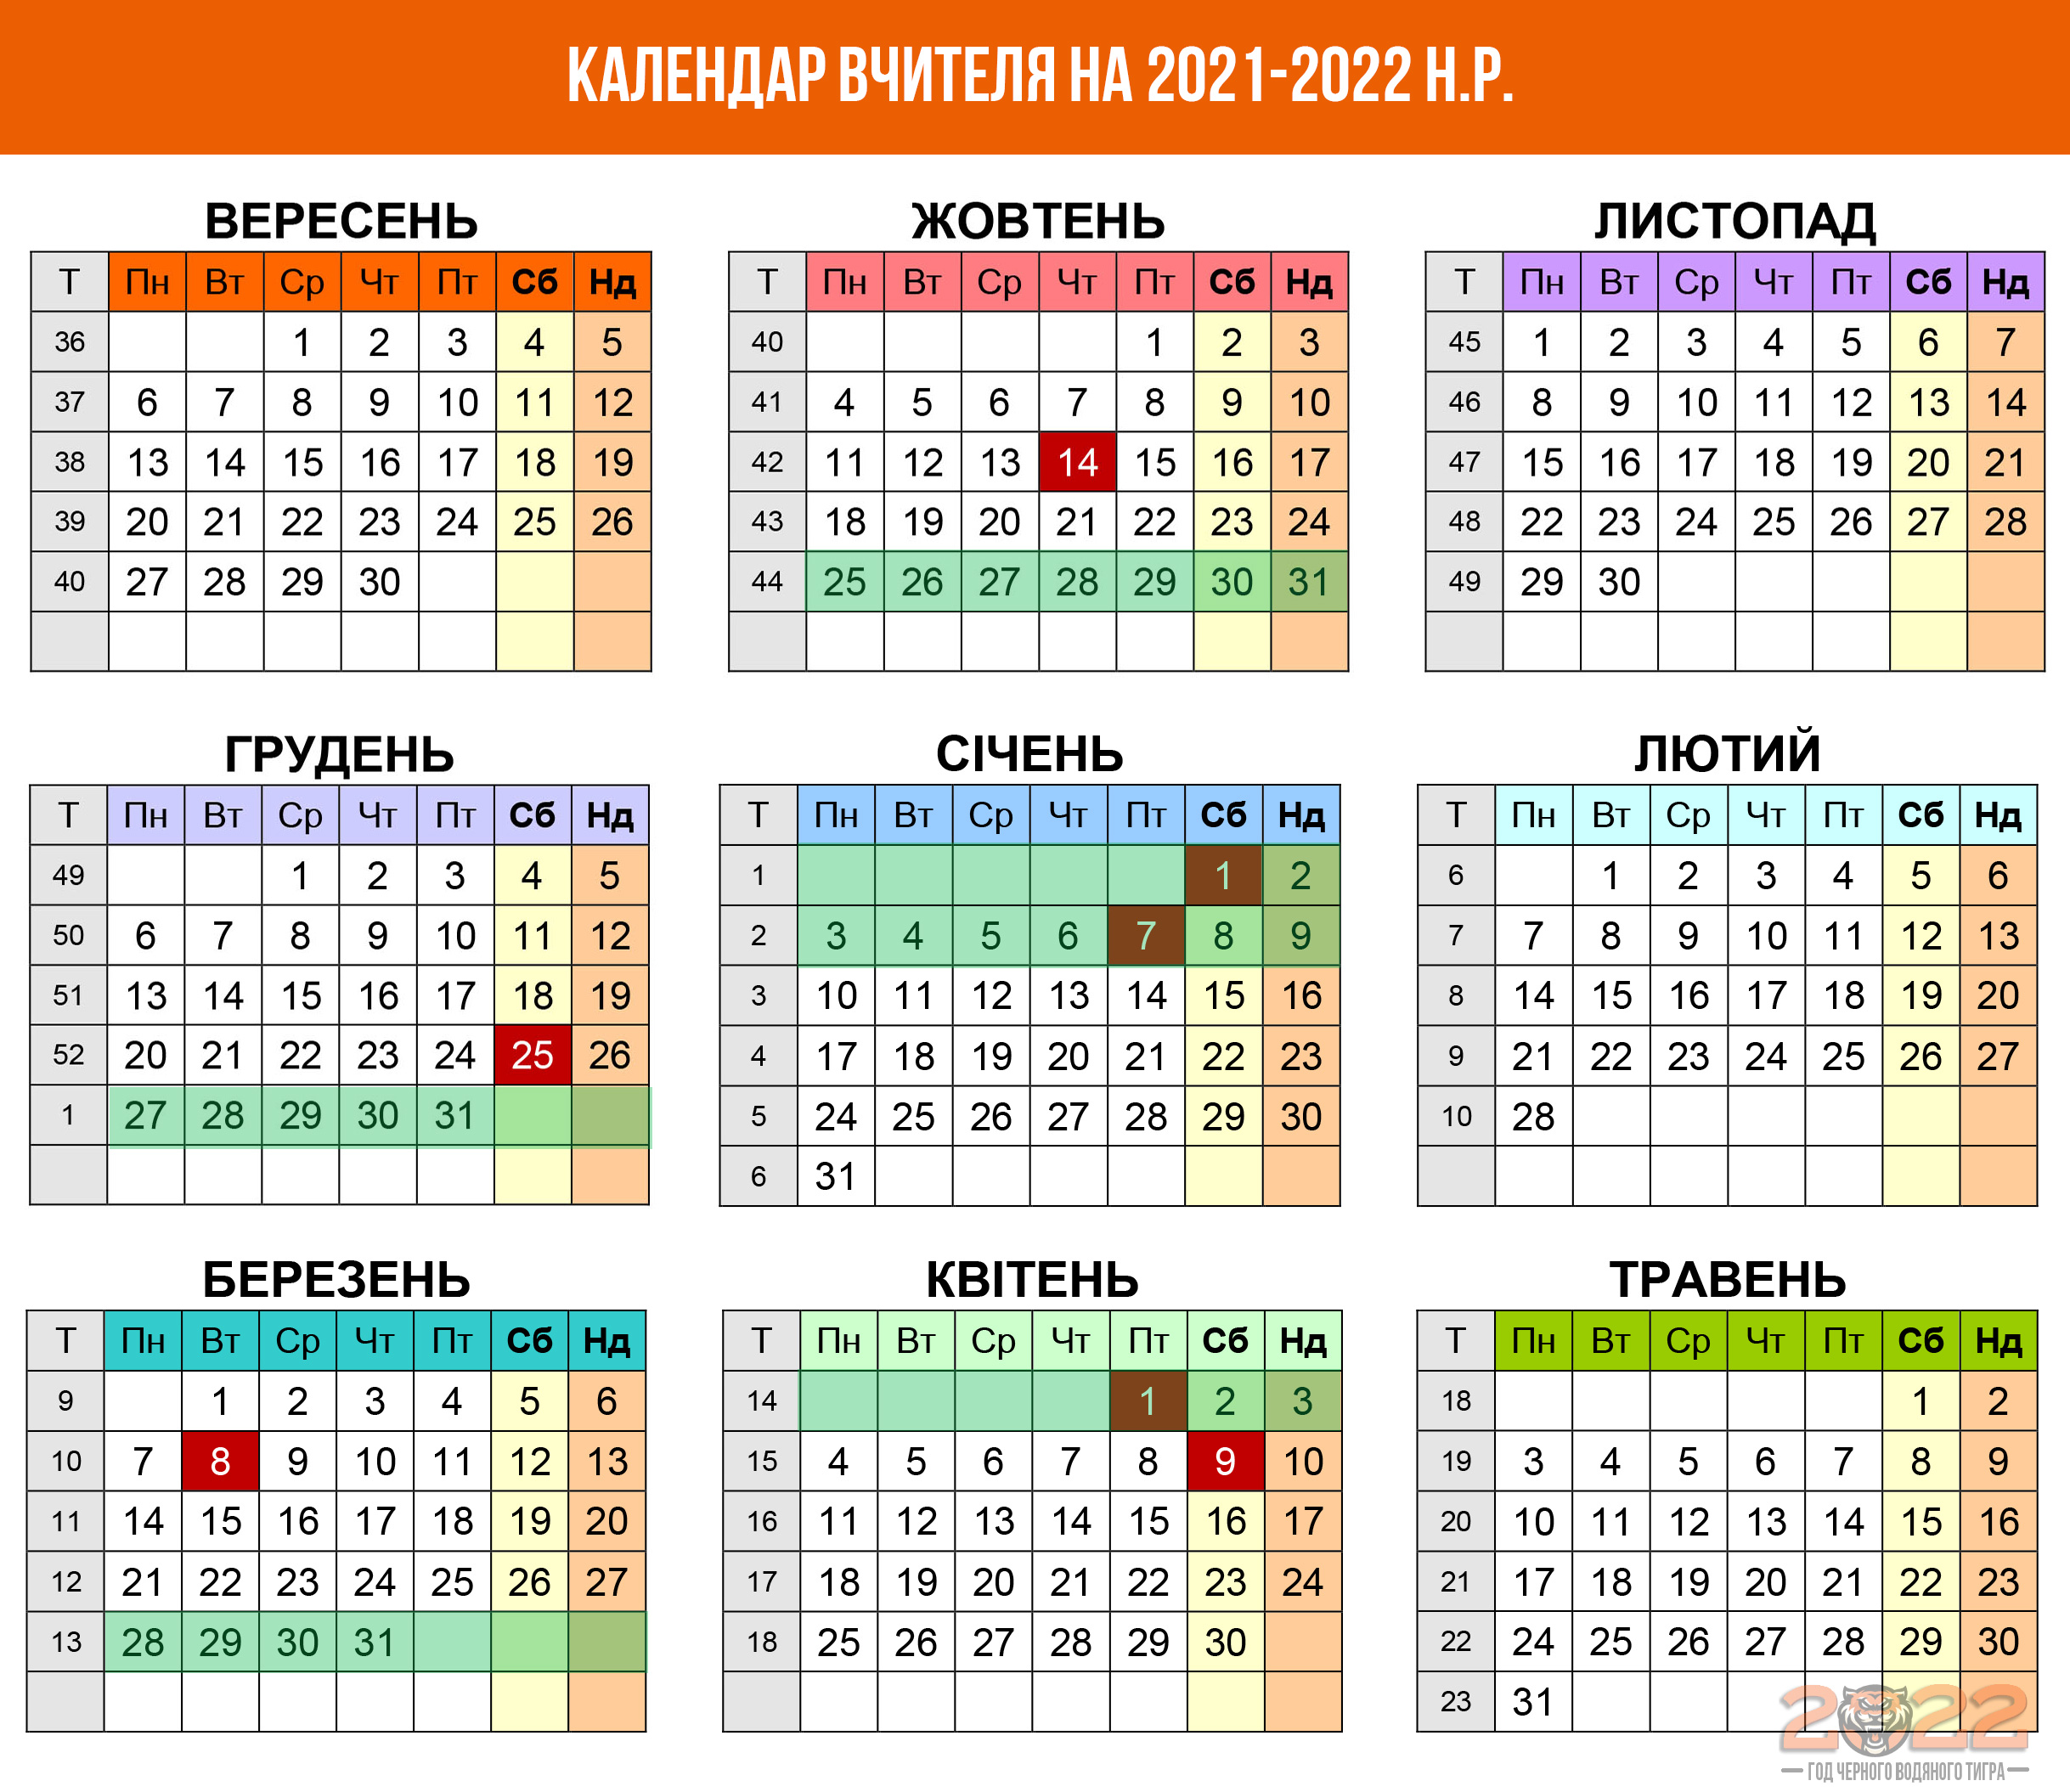 Календарь каникул на 2021-2022 год в школах Украины - даты